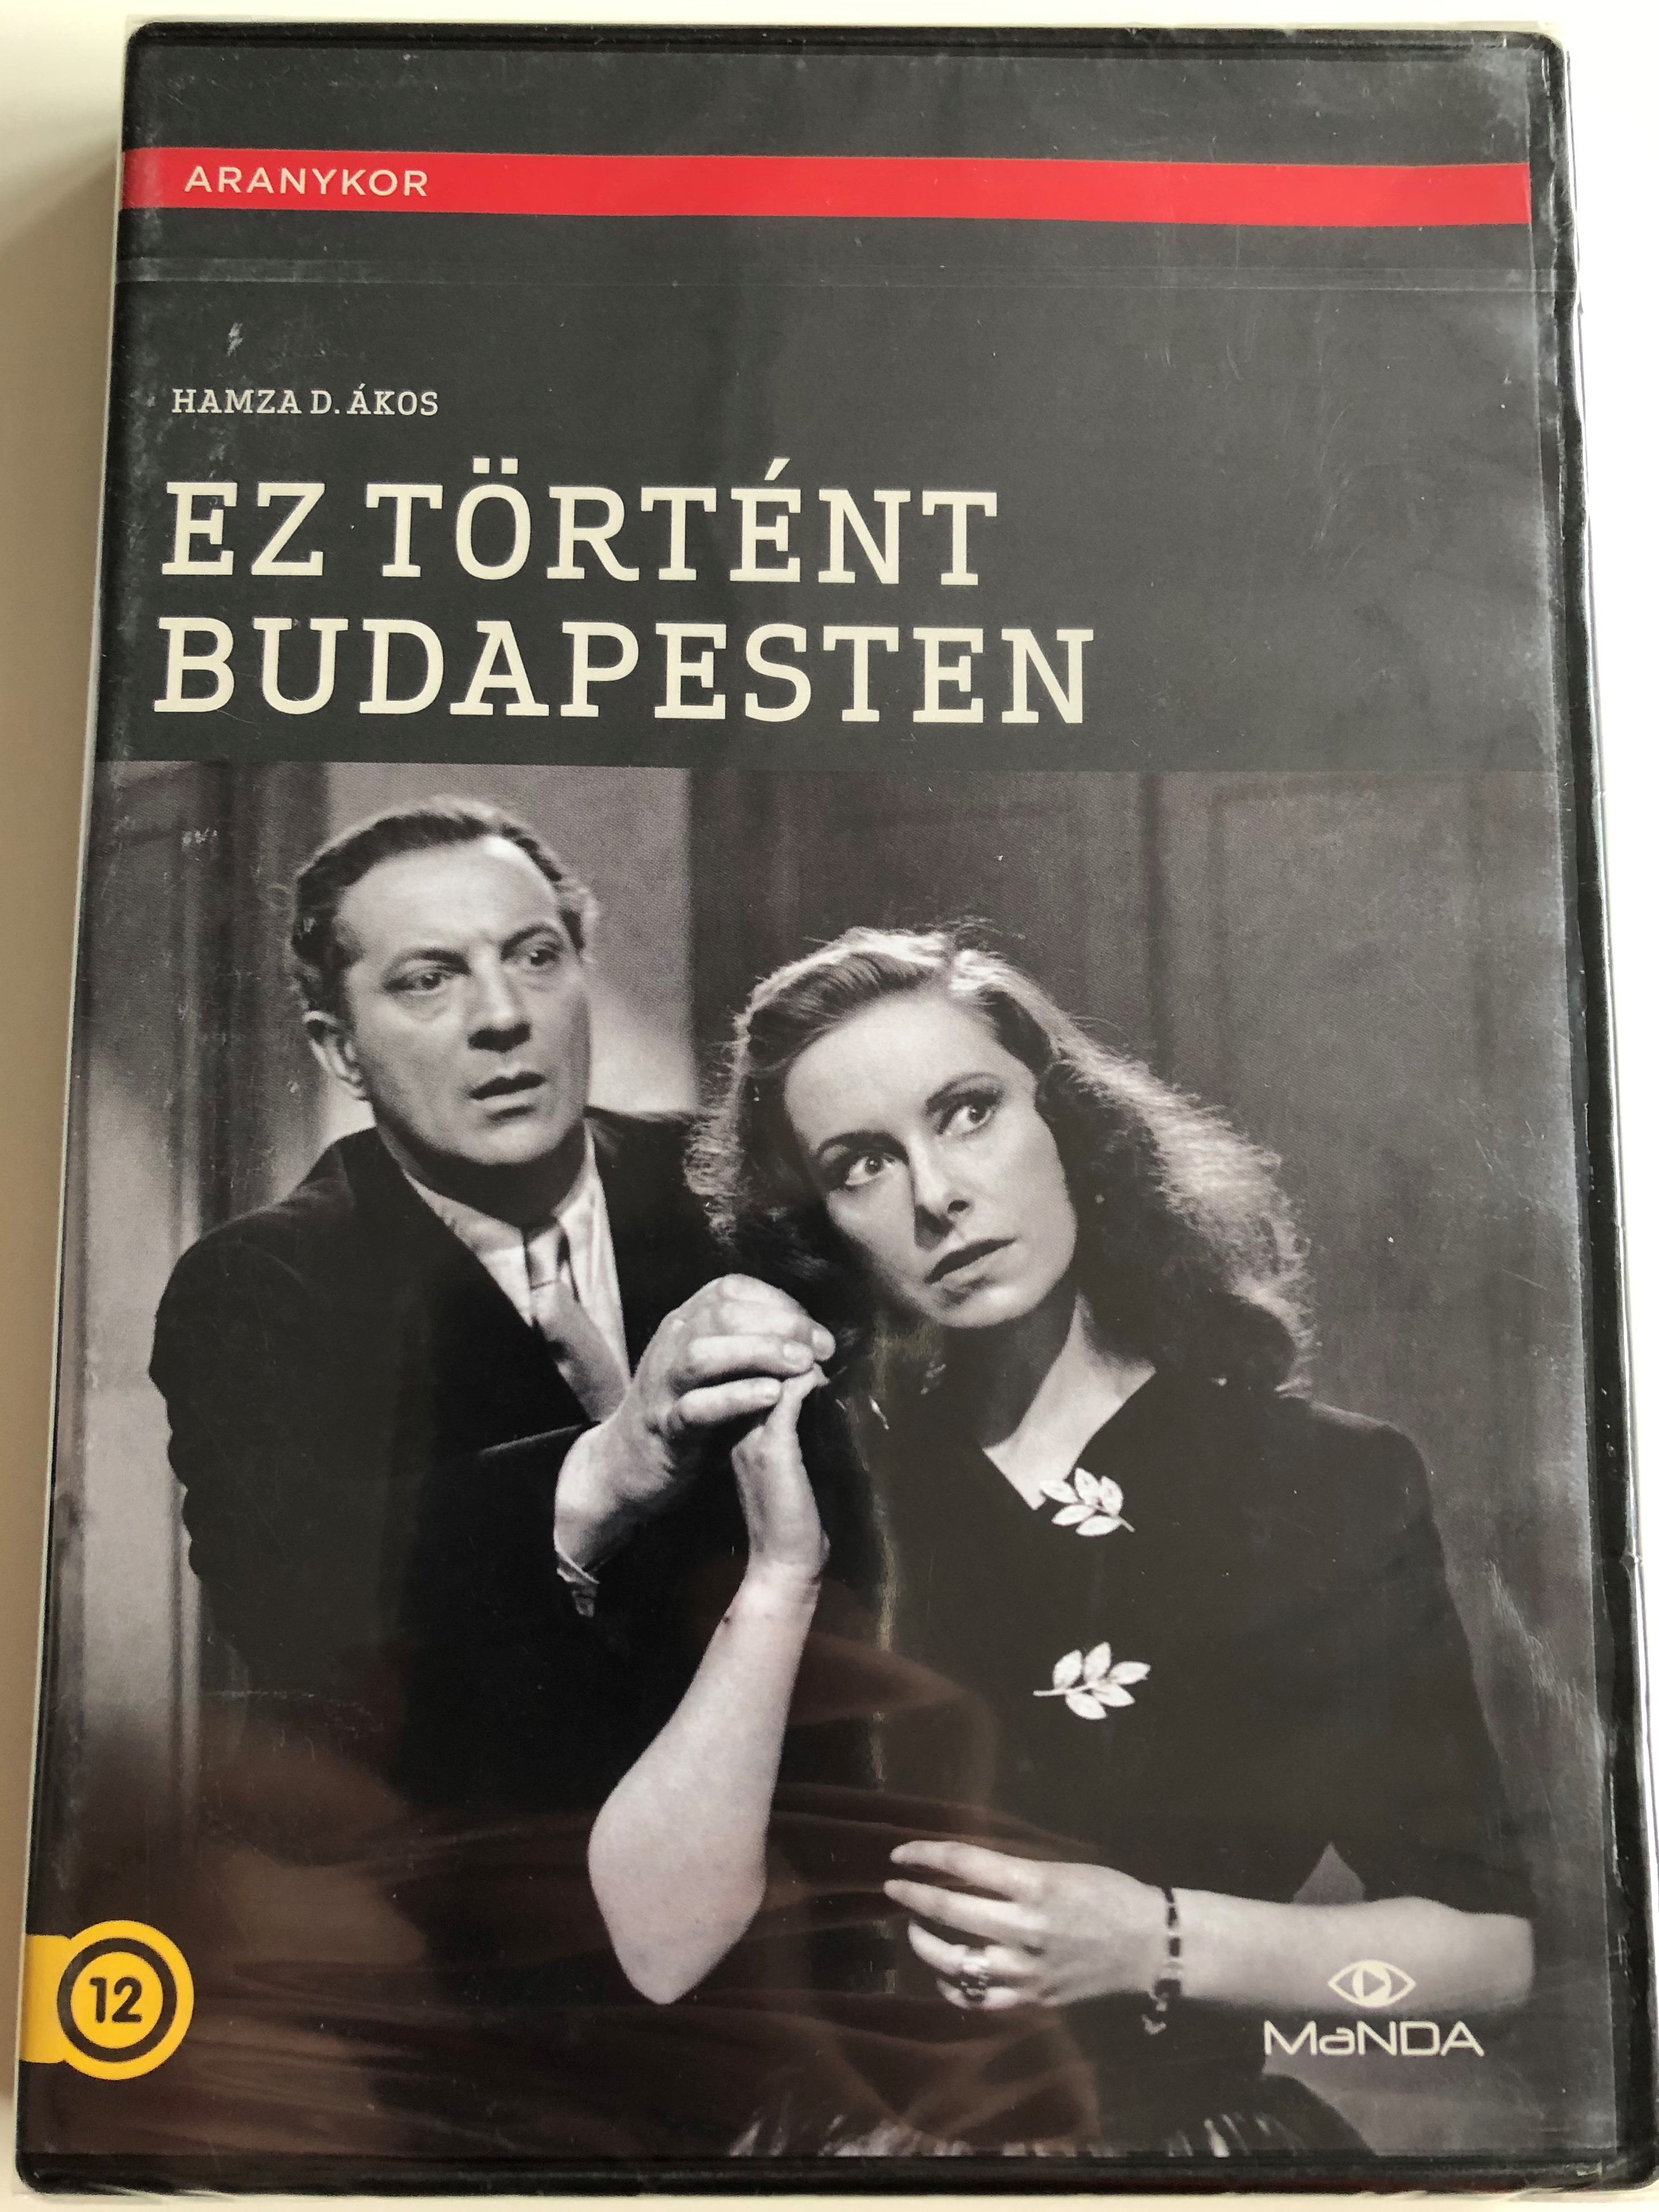 ez-t-rt-nt-budapesten-dvd-1944-directed-by-hamza-d.-kos-1.jpg